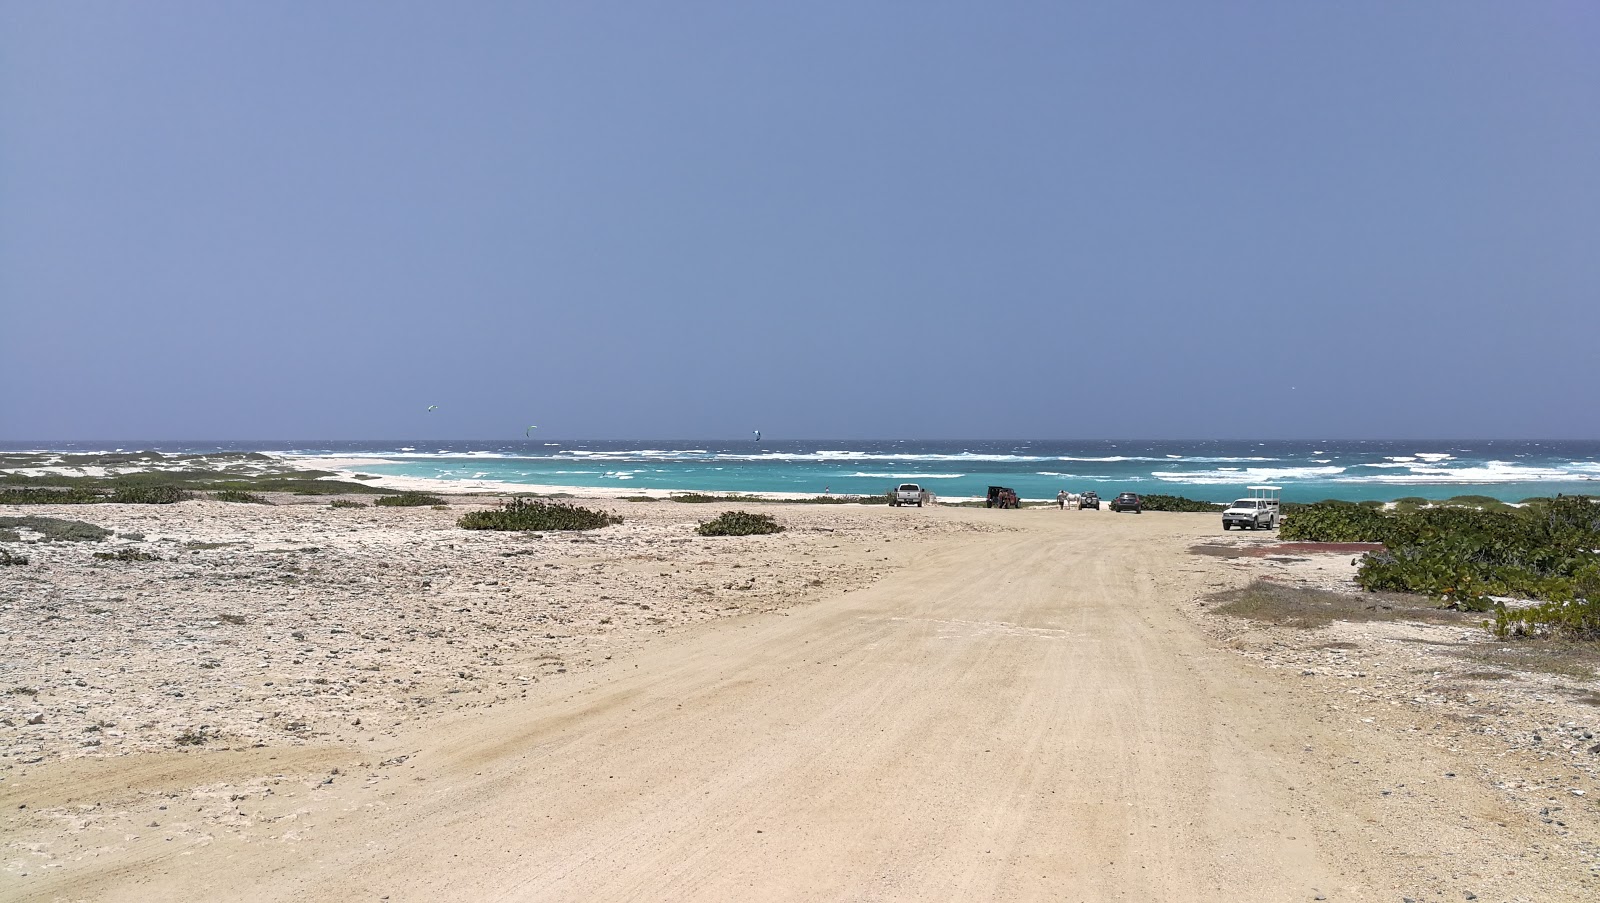 Foto av Bachelor's beach med turkos rent vatten yta